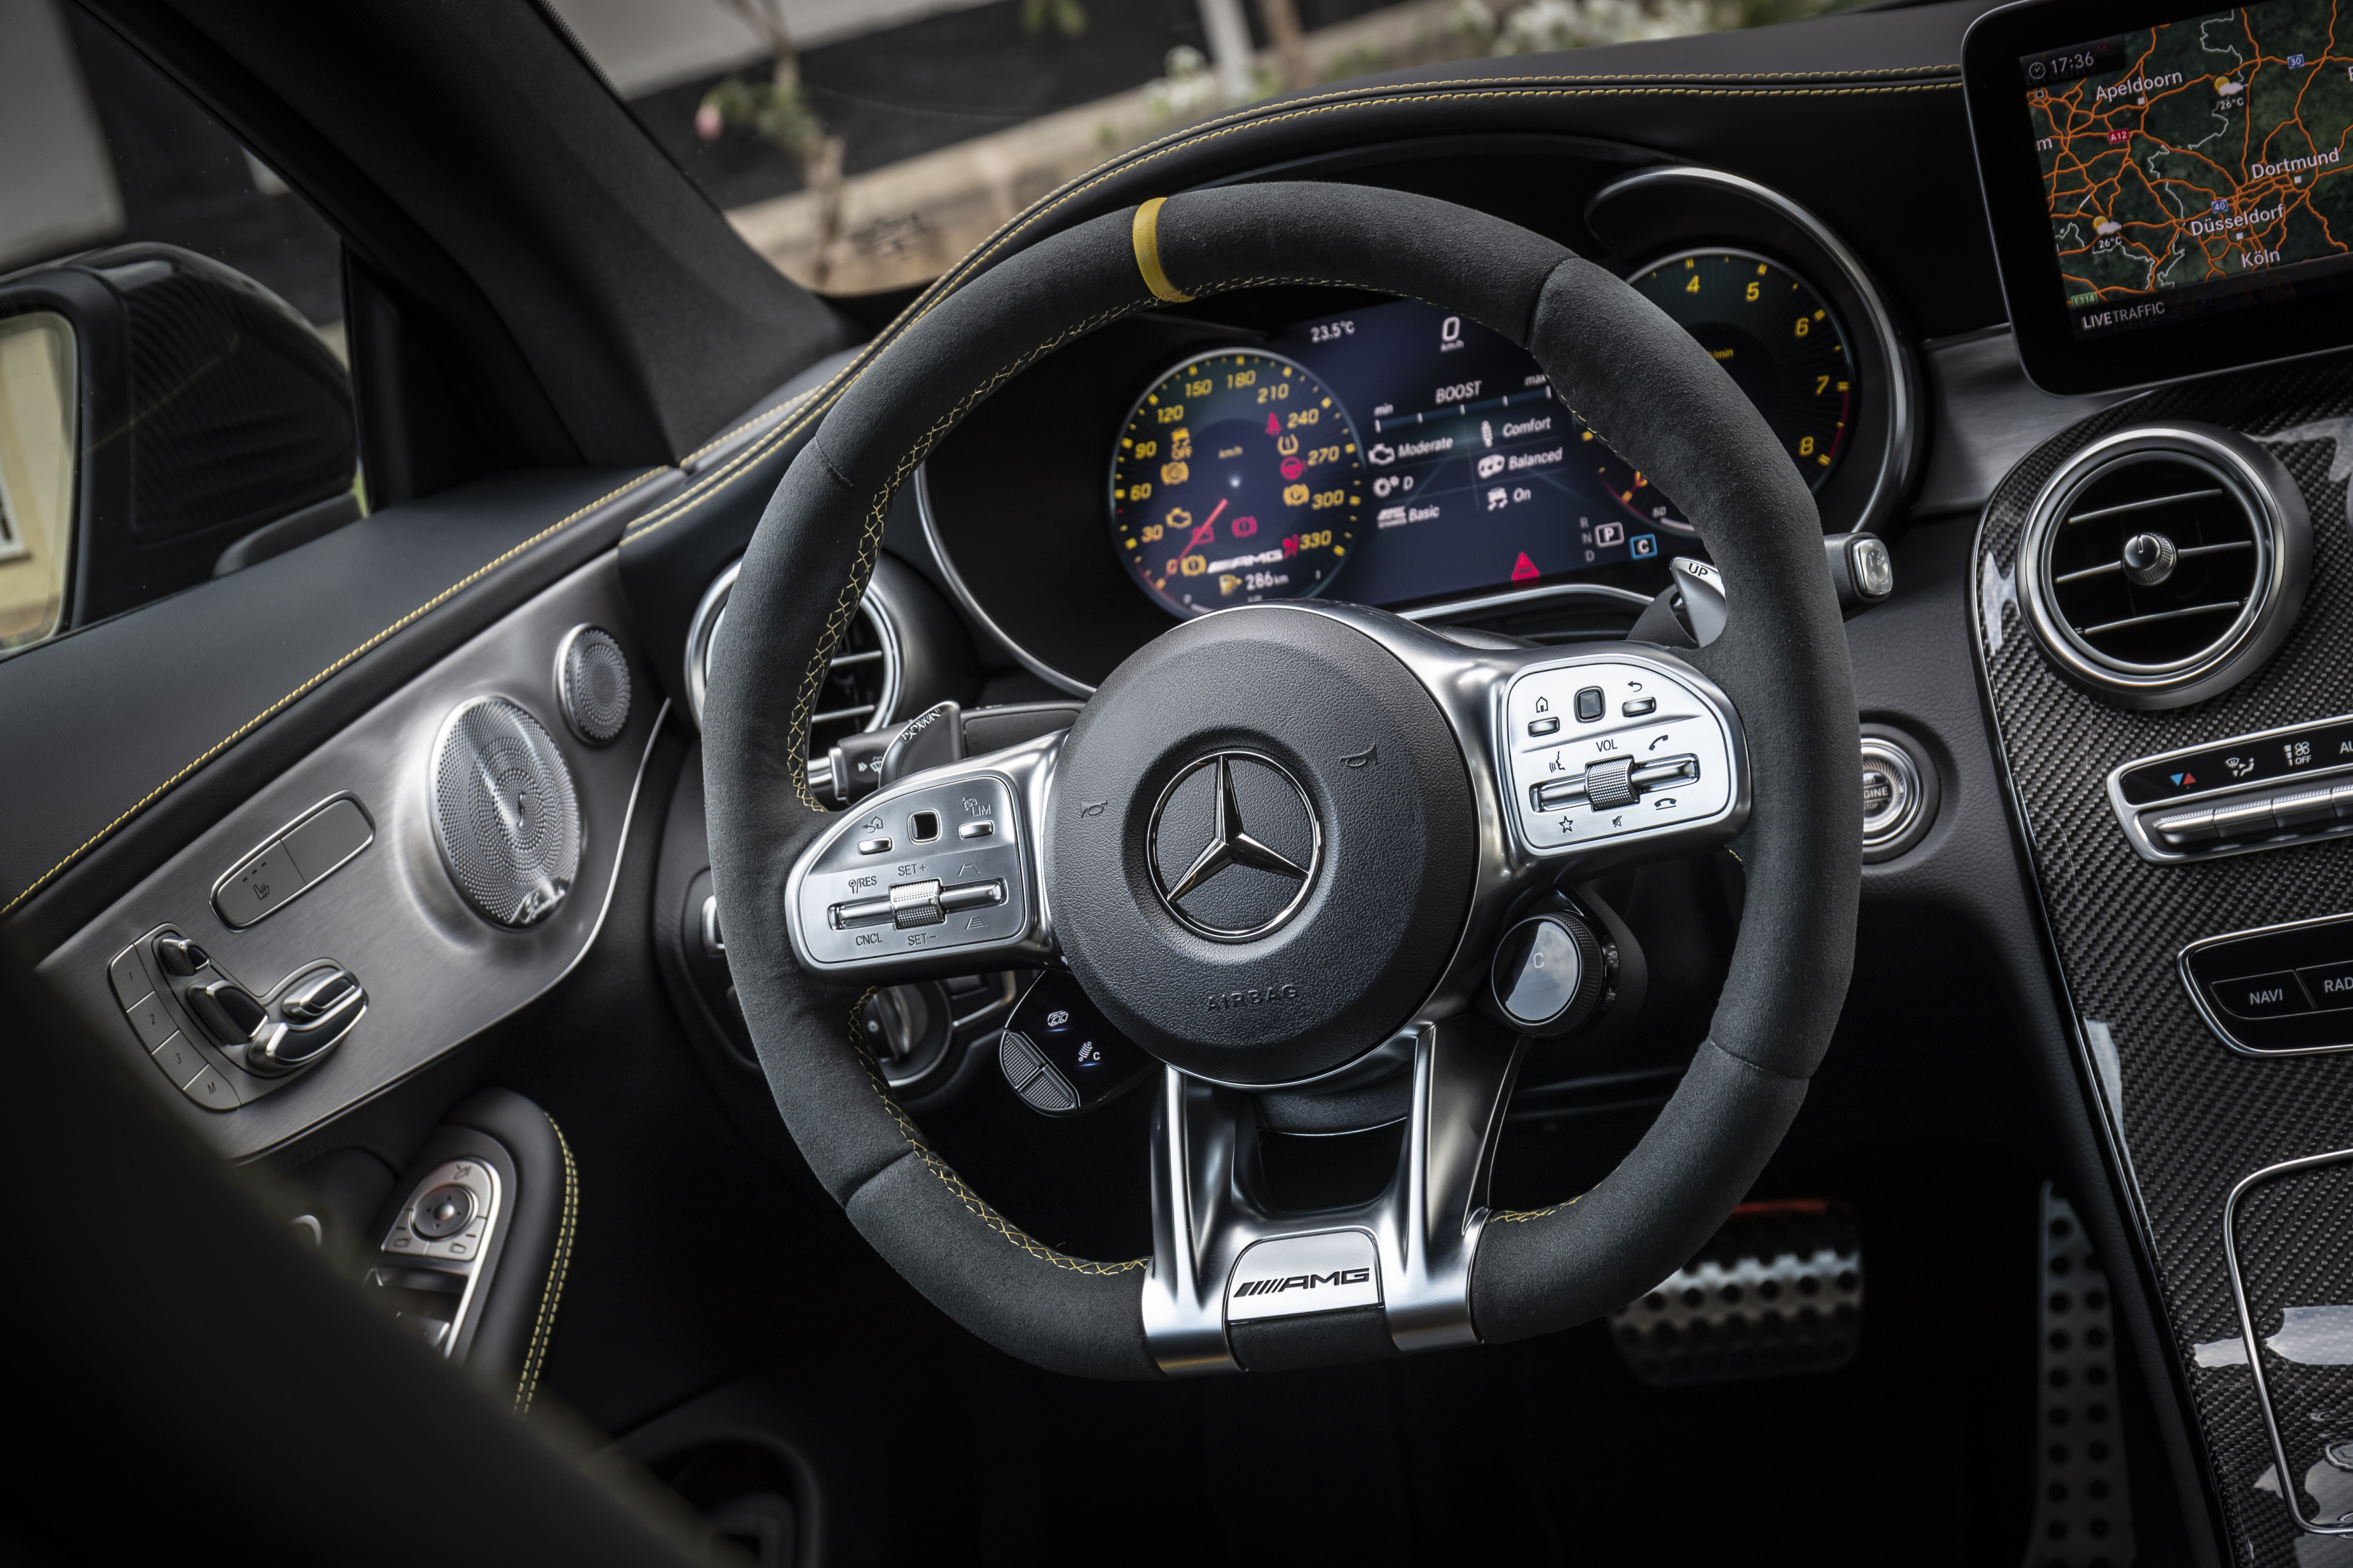 Mercedes Benz AMG binnacle cluster